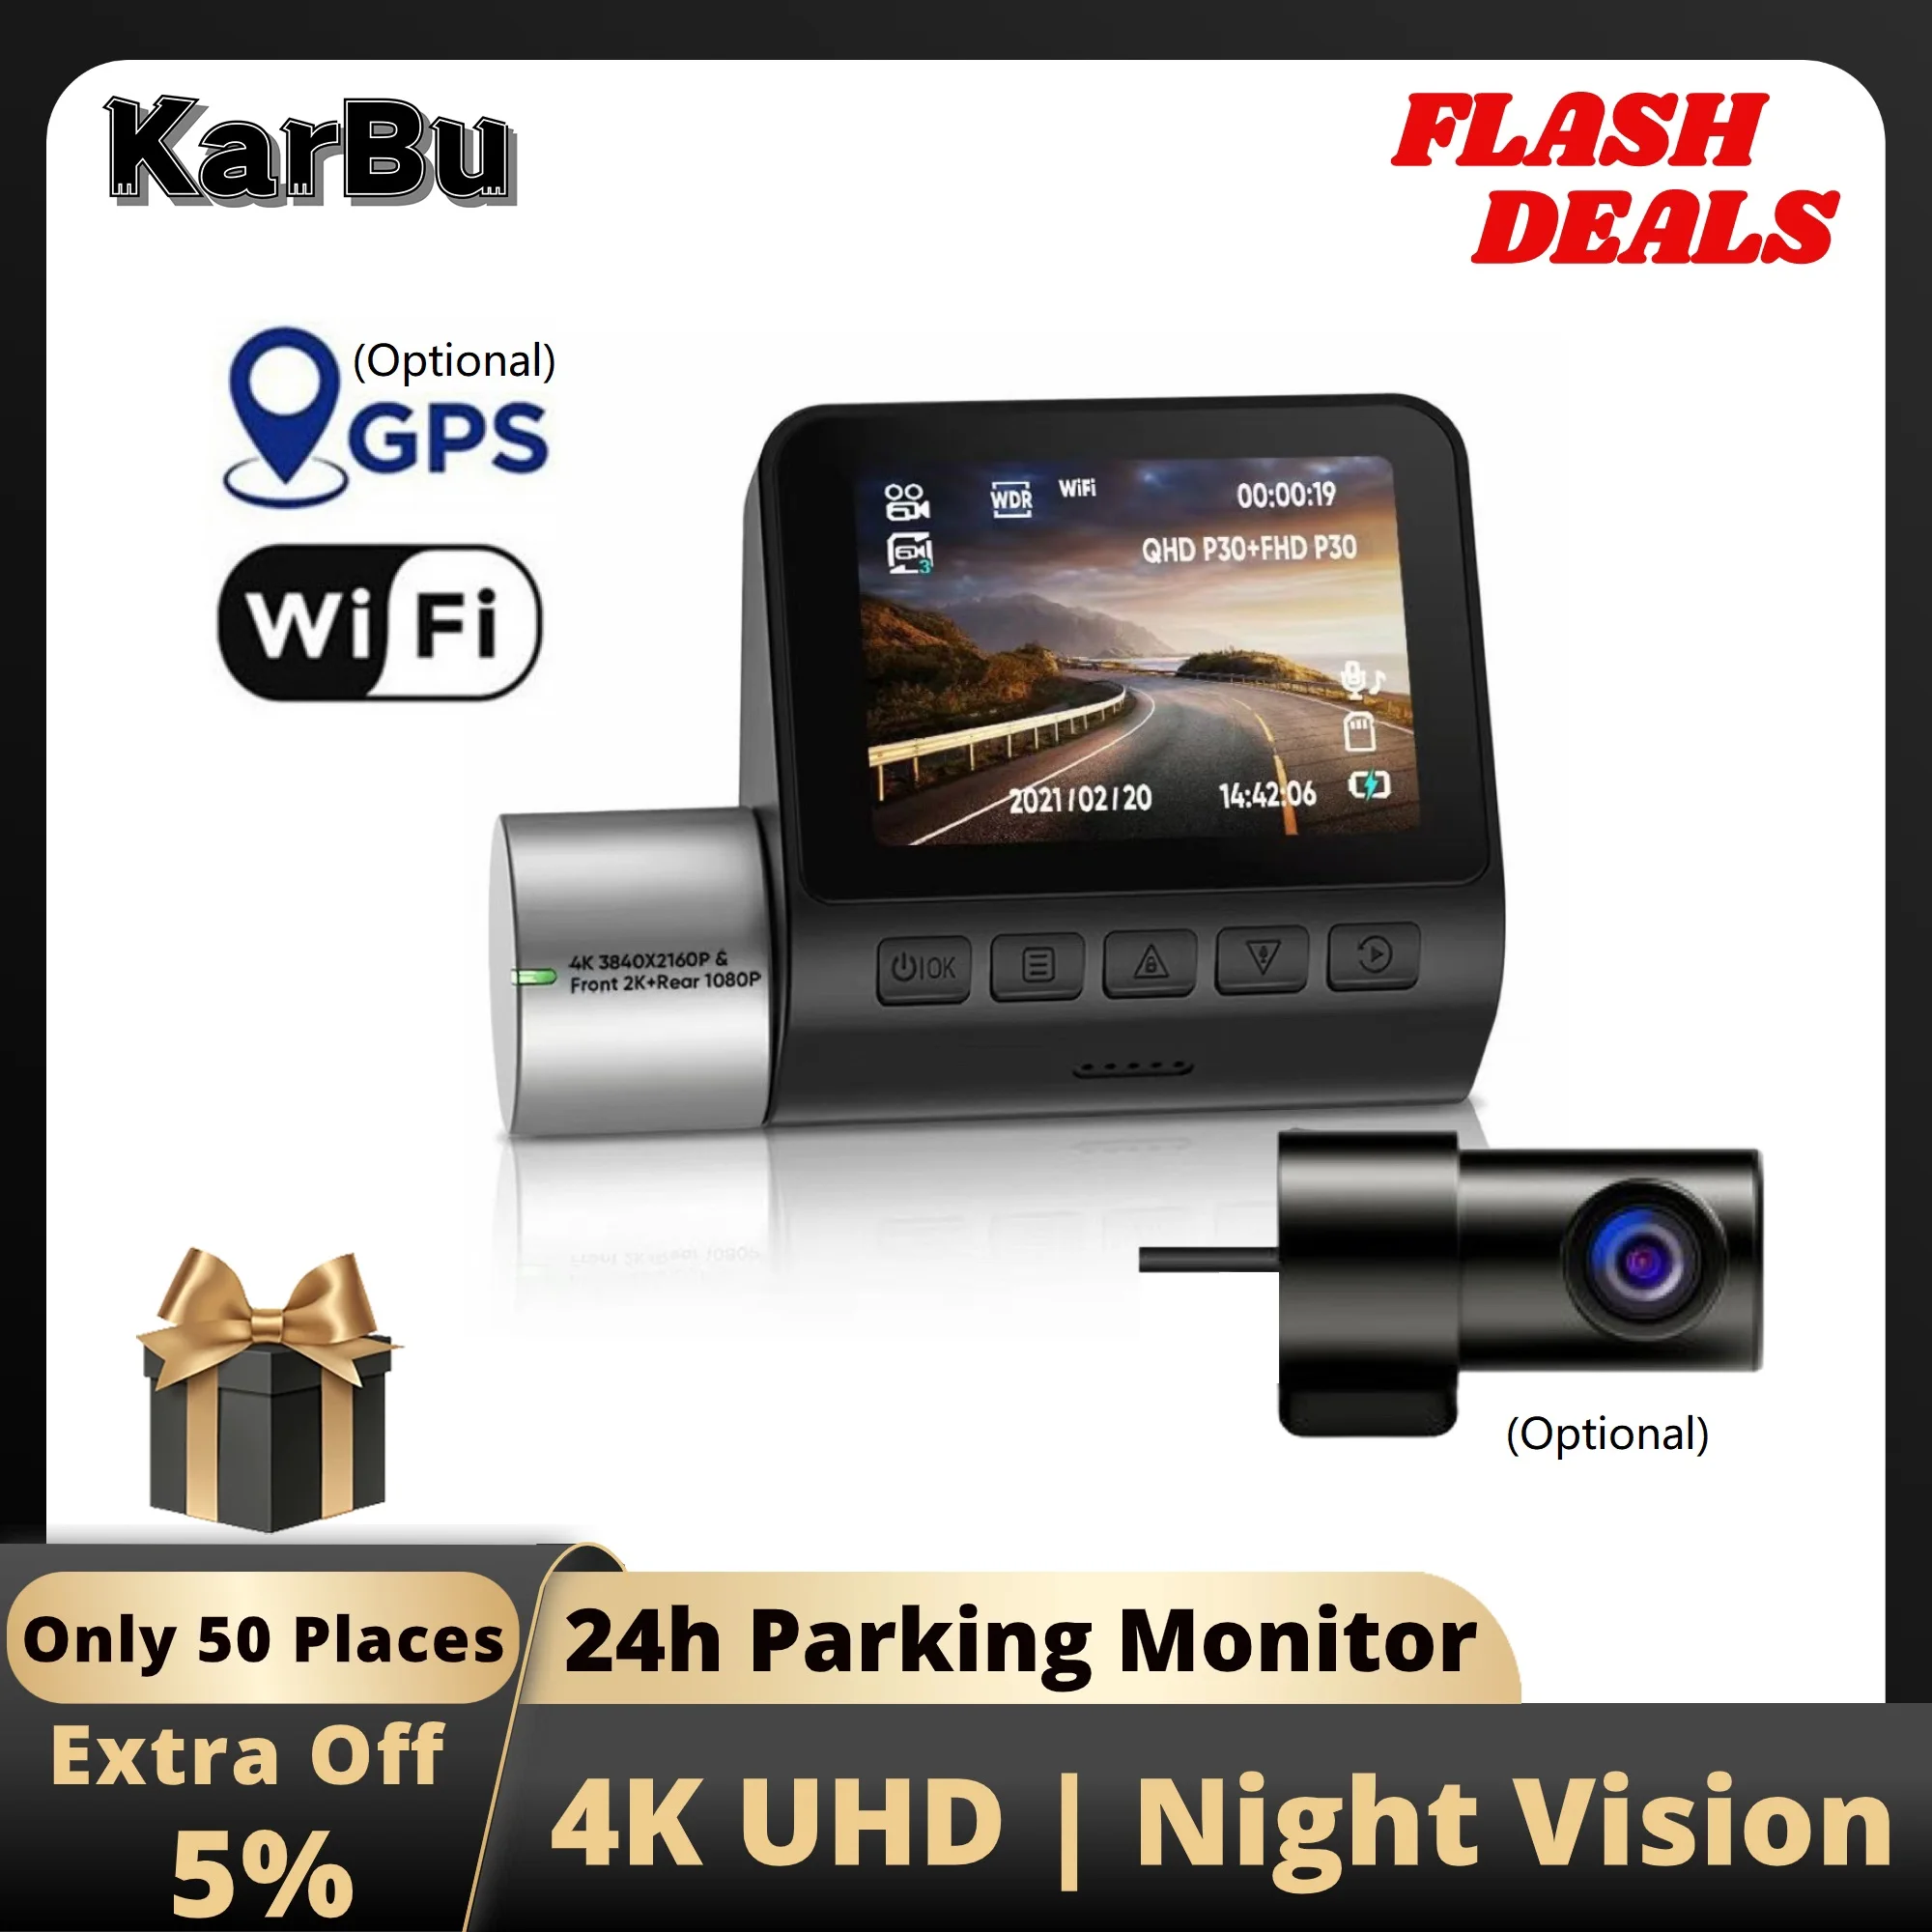 https://ae01.alicdn.com/kf/S25b2f3f51e2e451599baf09b2f2ab827c/Dashcam-4K-GPS-WIFI-24h-Parking-Monitor-Dash-Cam-Night-Vision-Dual-Camera-for-Car-Dvr.jpg